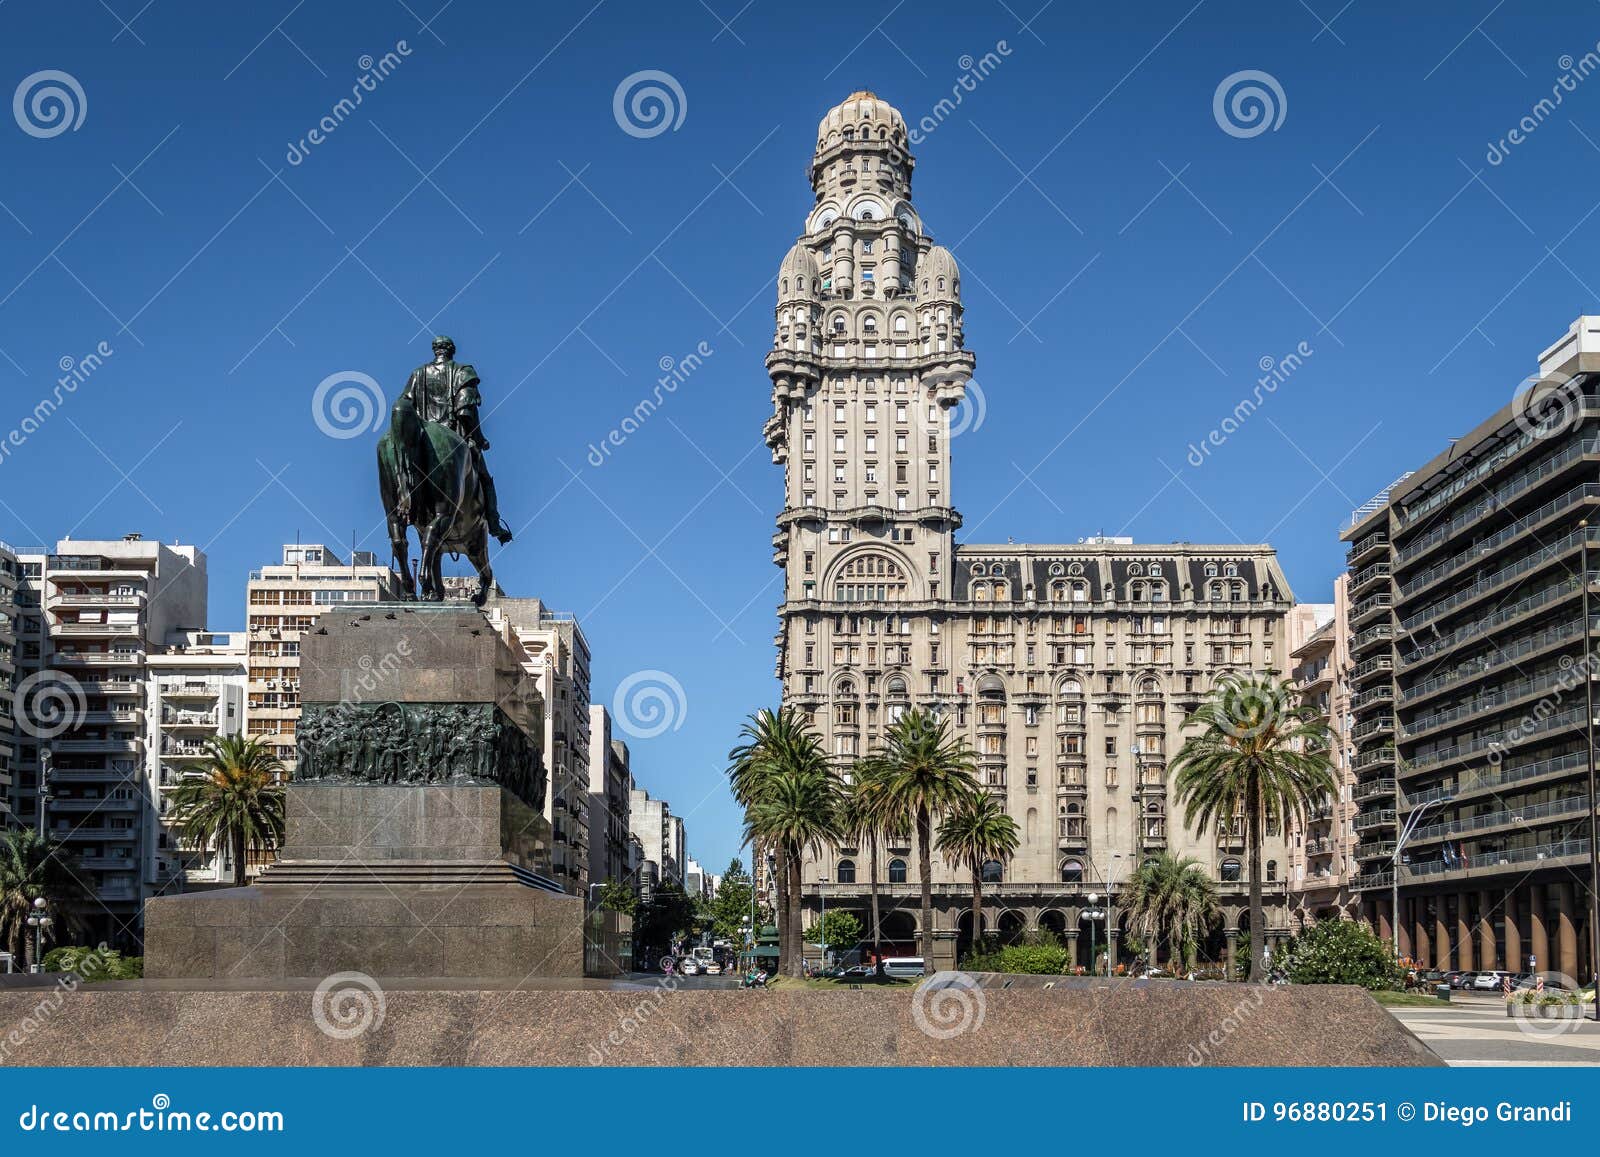 plaza independencia and palacio salvo - montevideo, uruguay